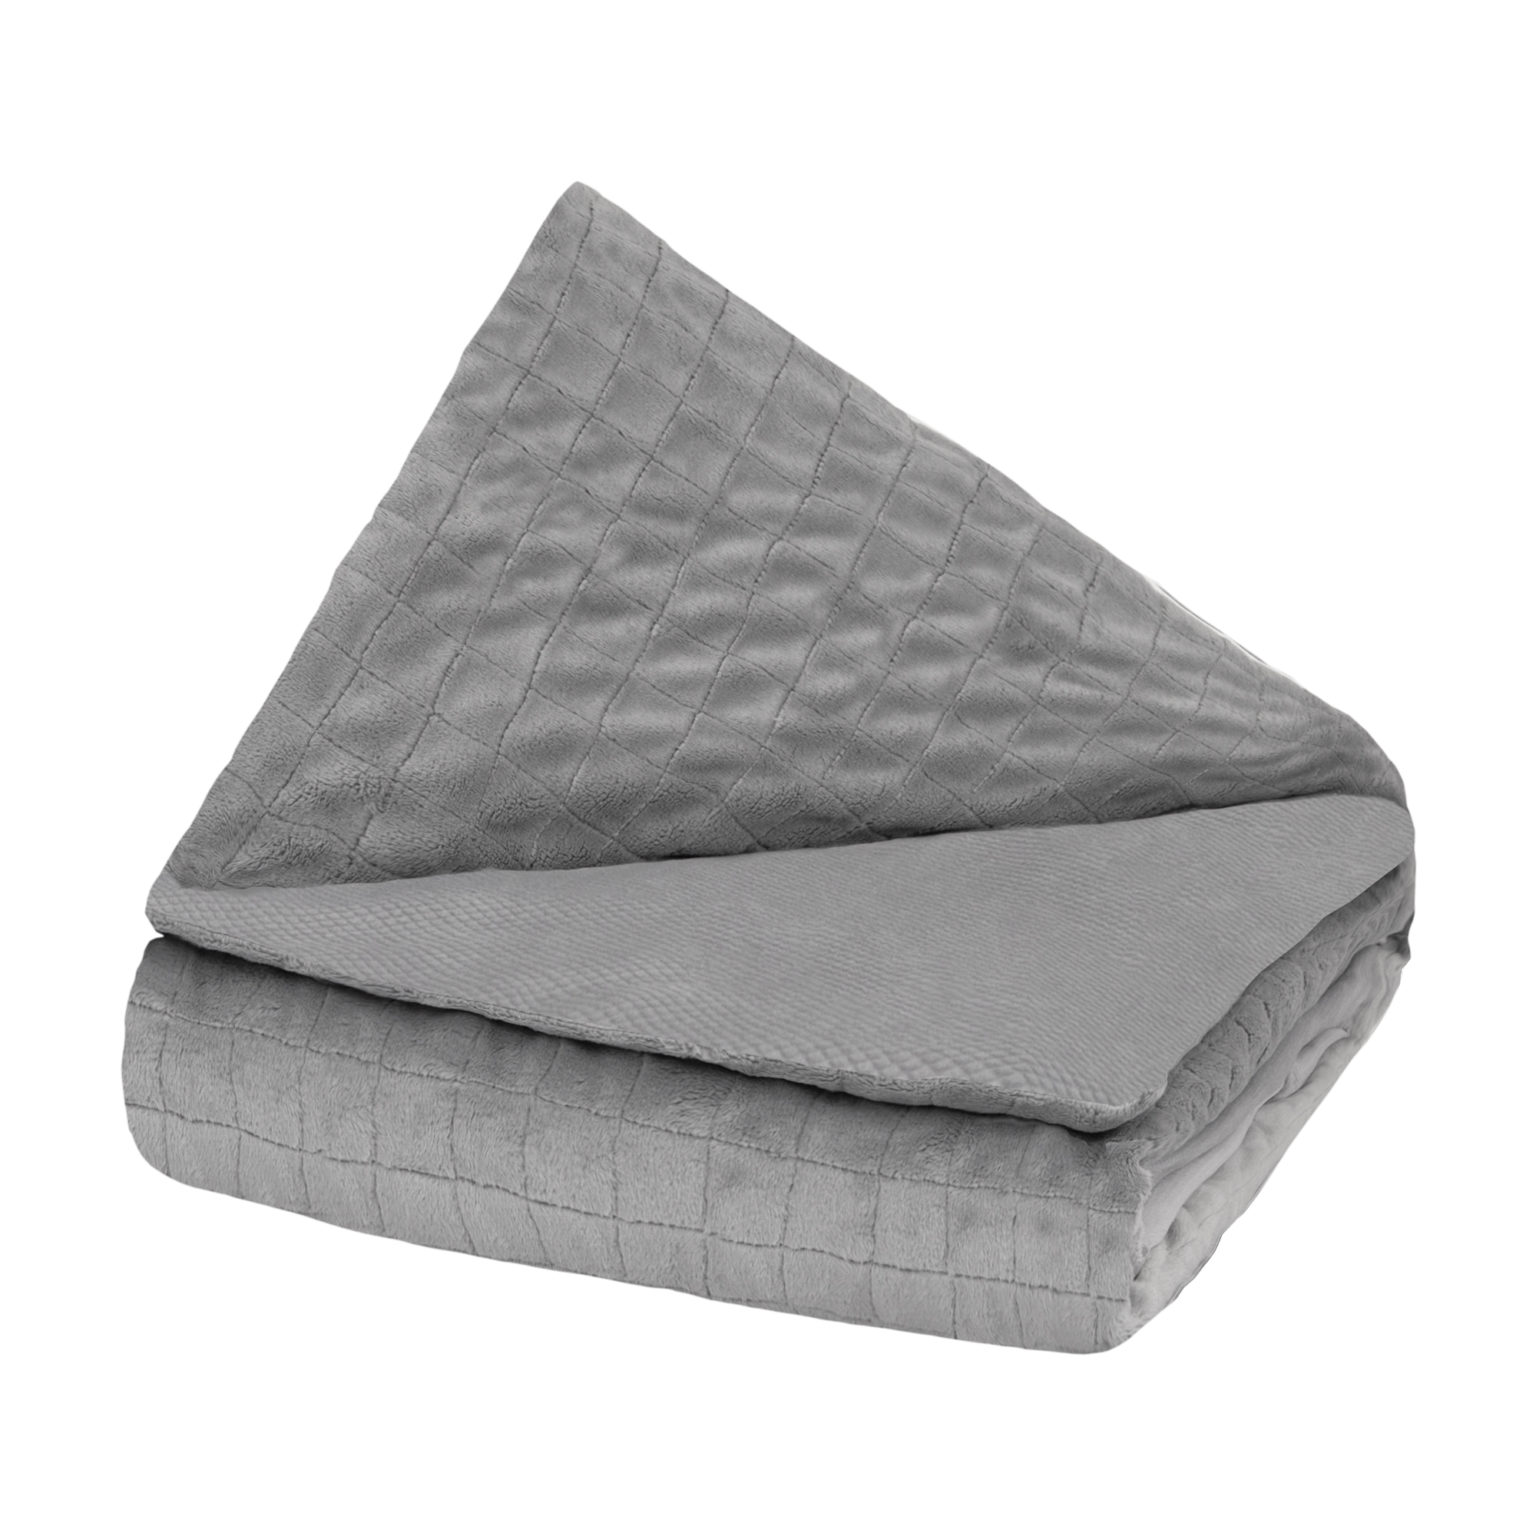 Basic Gravity® Blanket - Weighted Blankets - Gravityblankets UK